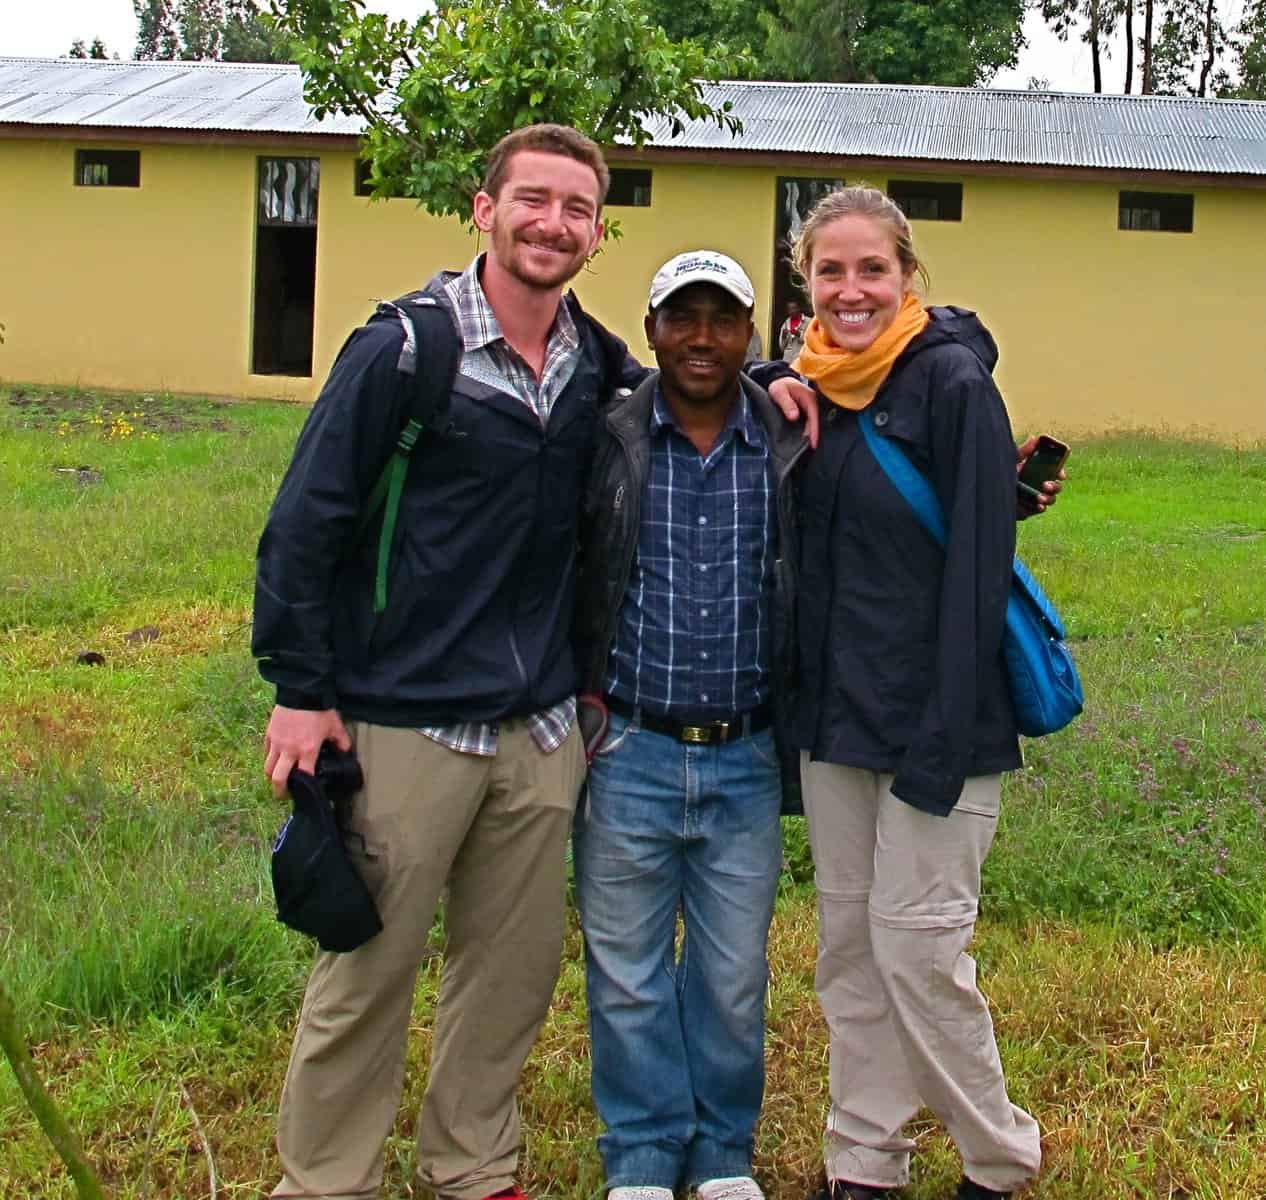 Working in Gondar, Ethiopia, Jewish Service Corps Fellows Max Sandler and Elizabeth Kurtis with Ethiopian friend.